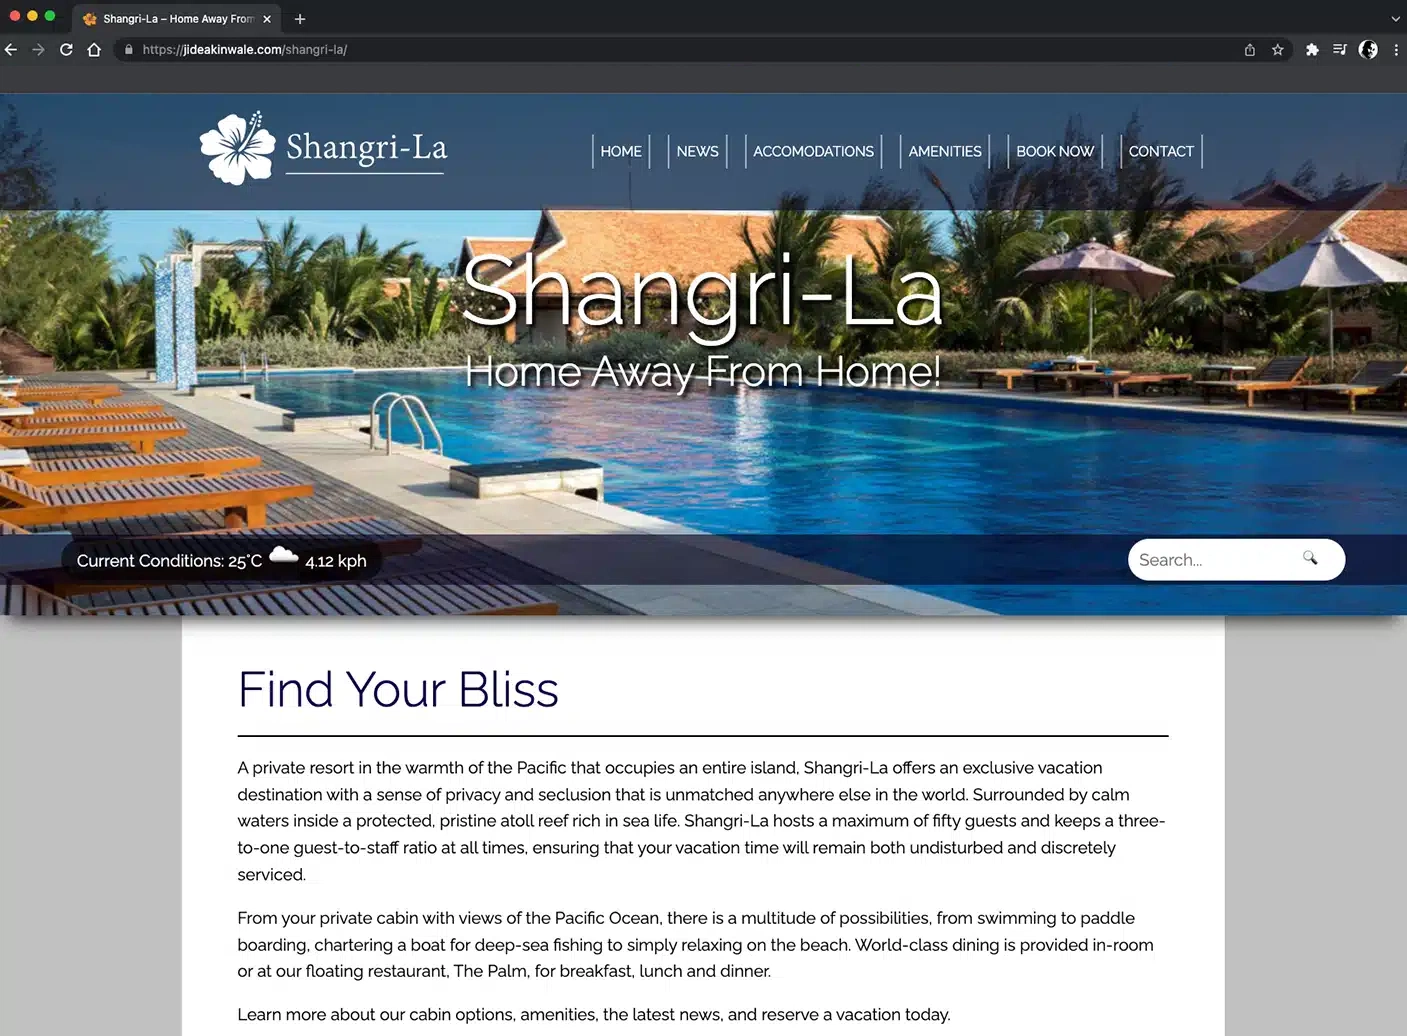 Shangri-la website image